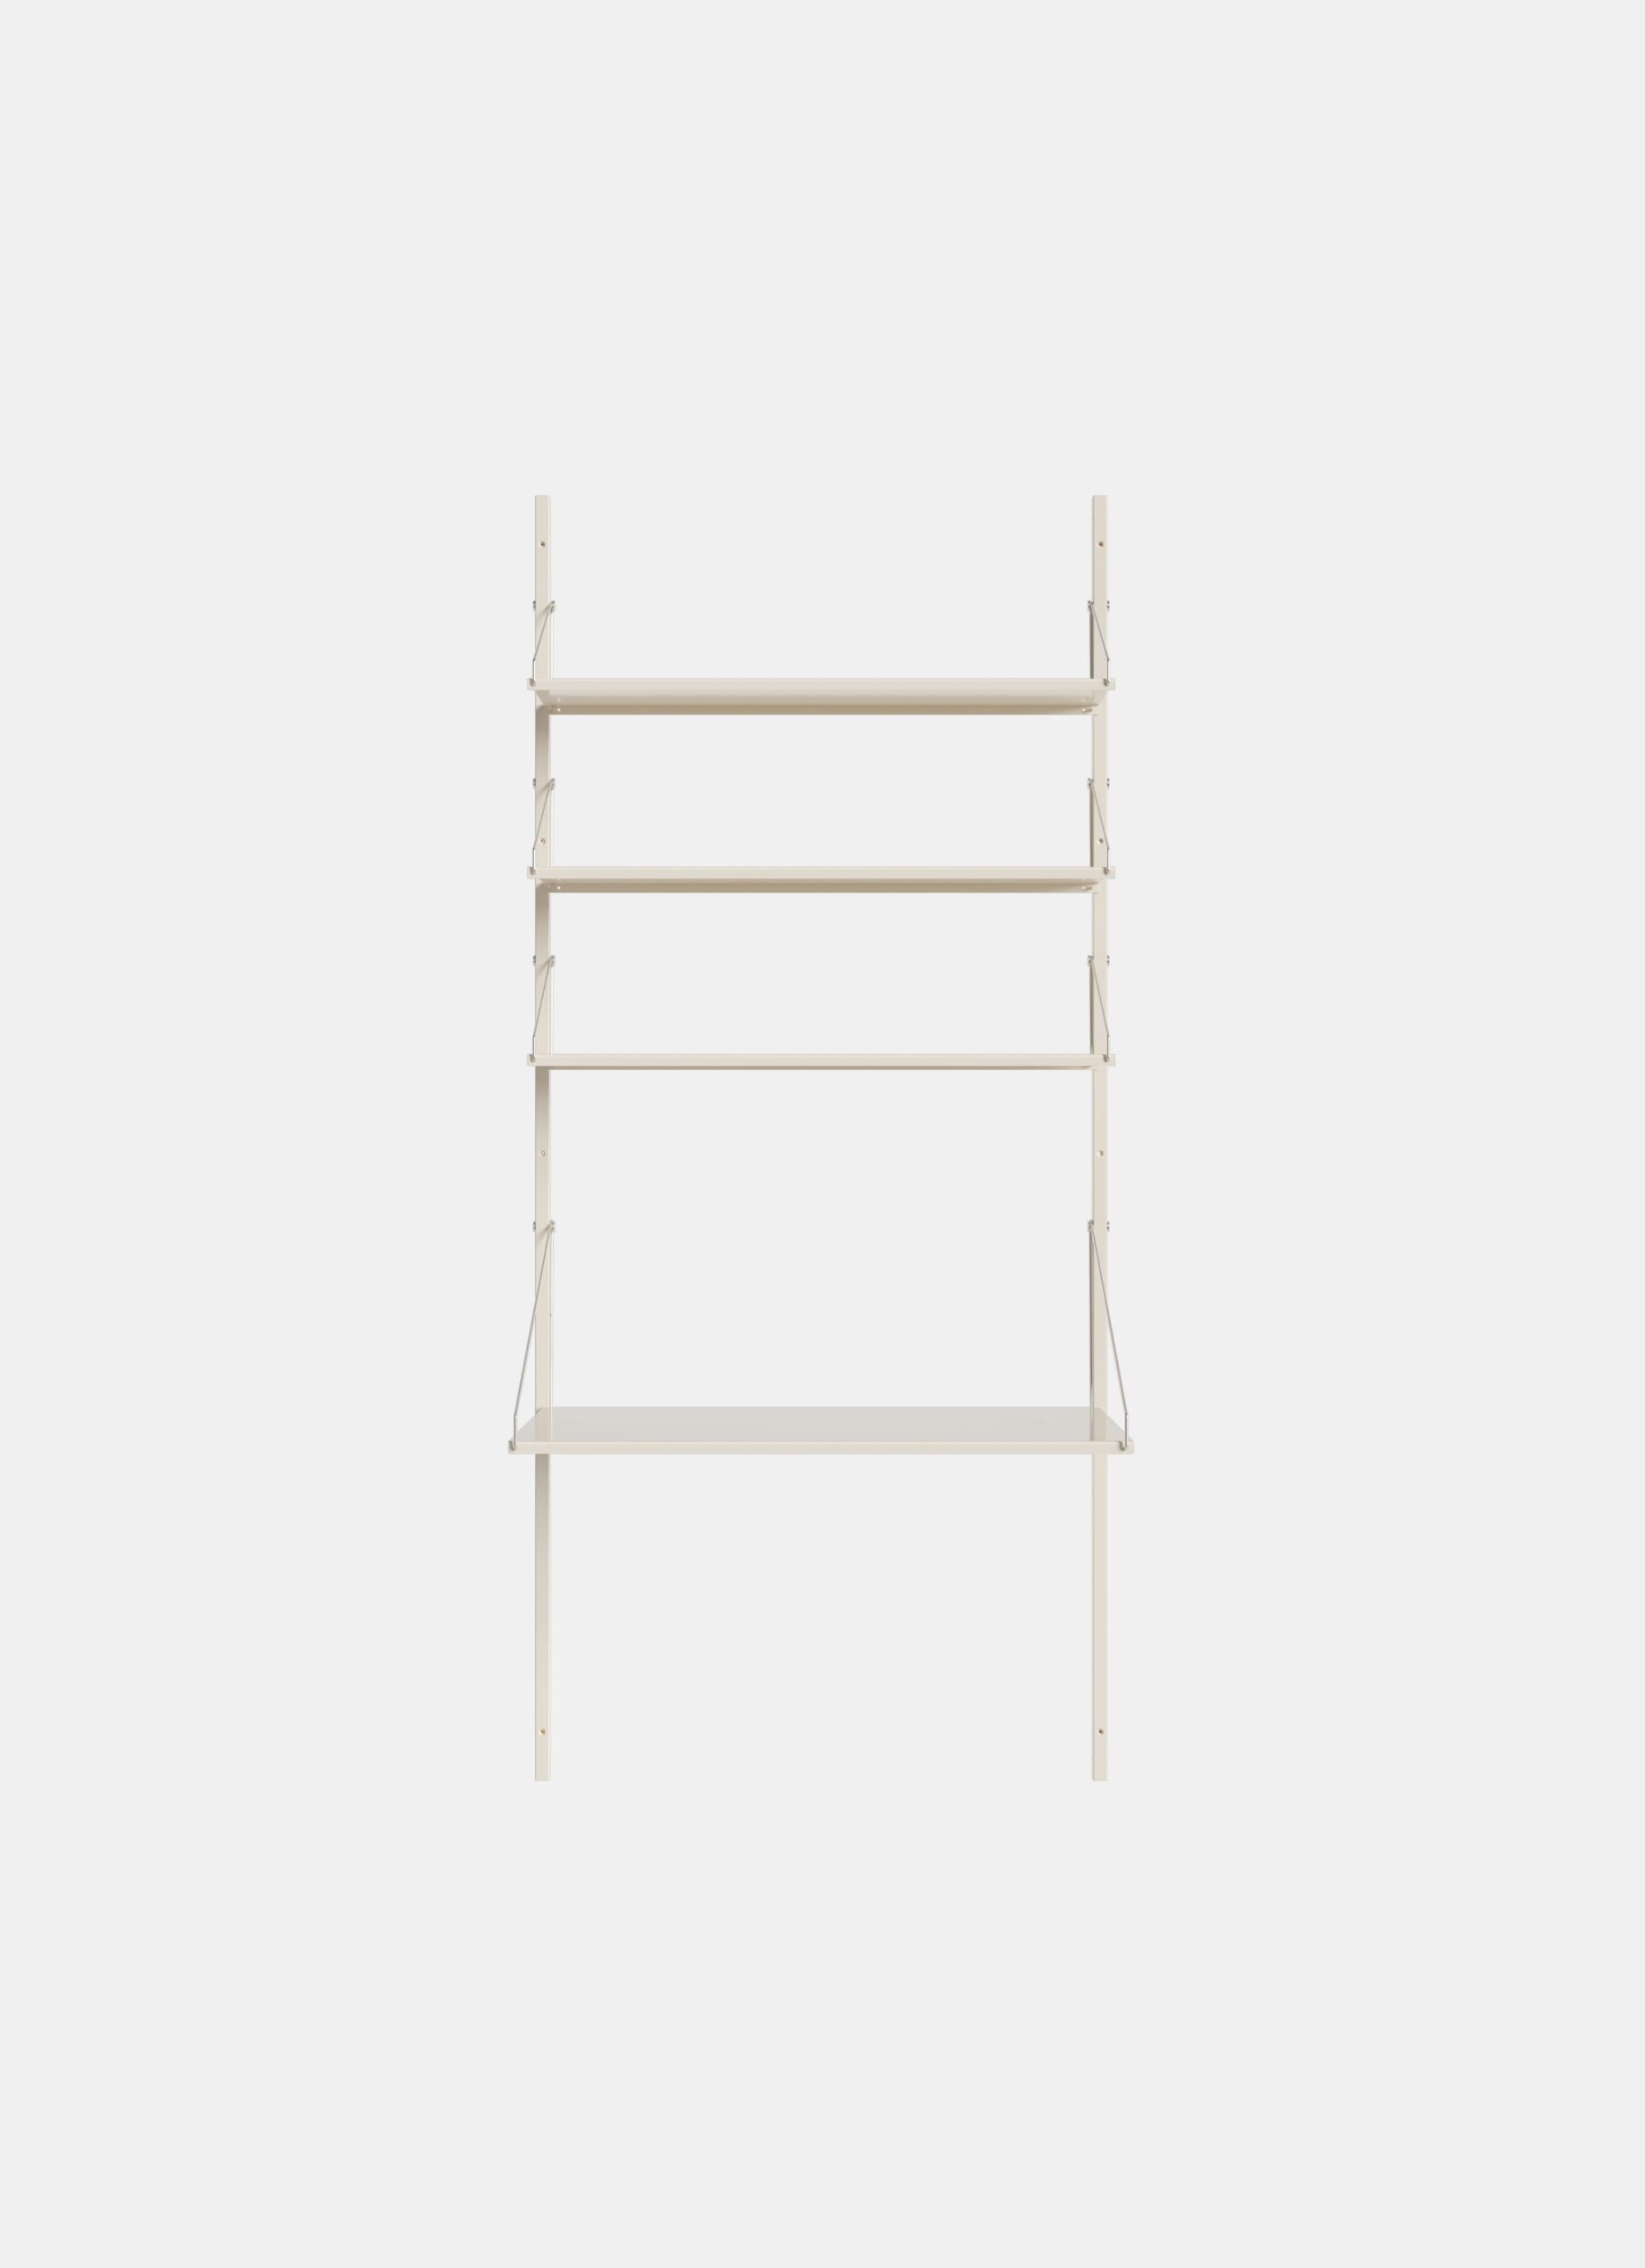 Frama - Shelf Library - Warm White Steel - H1852/W80 - Desk Section